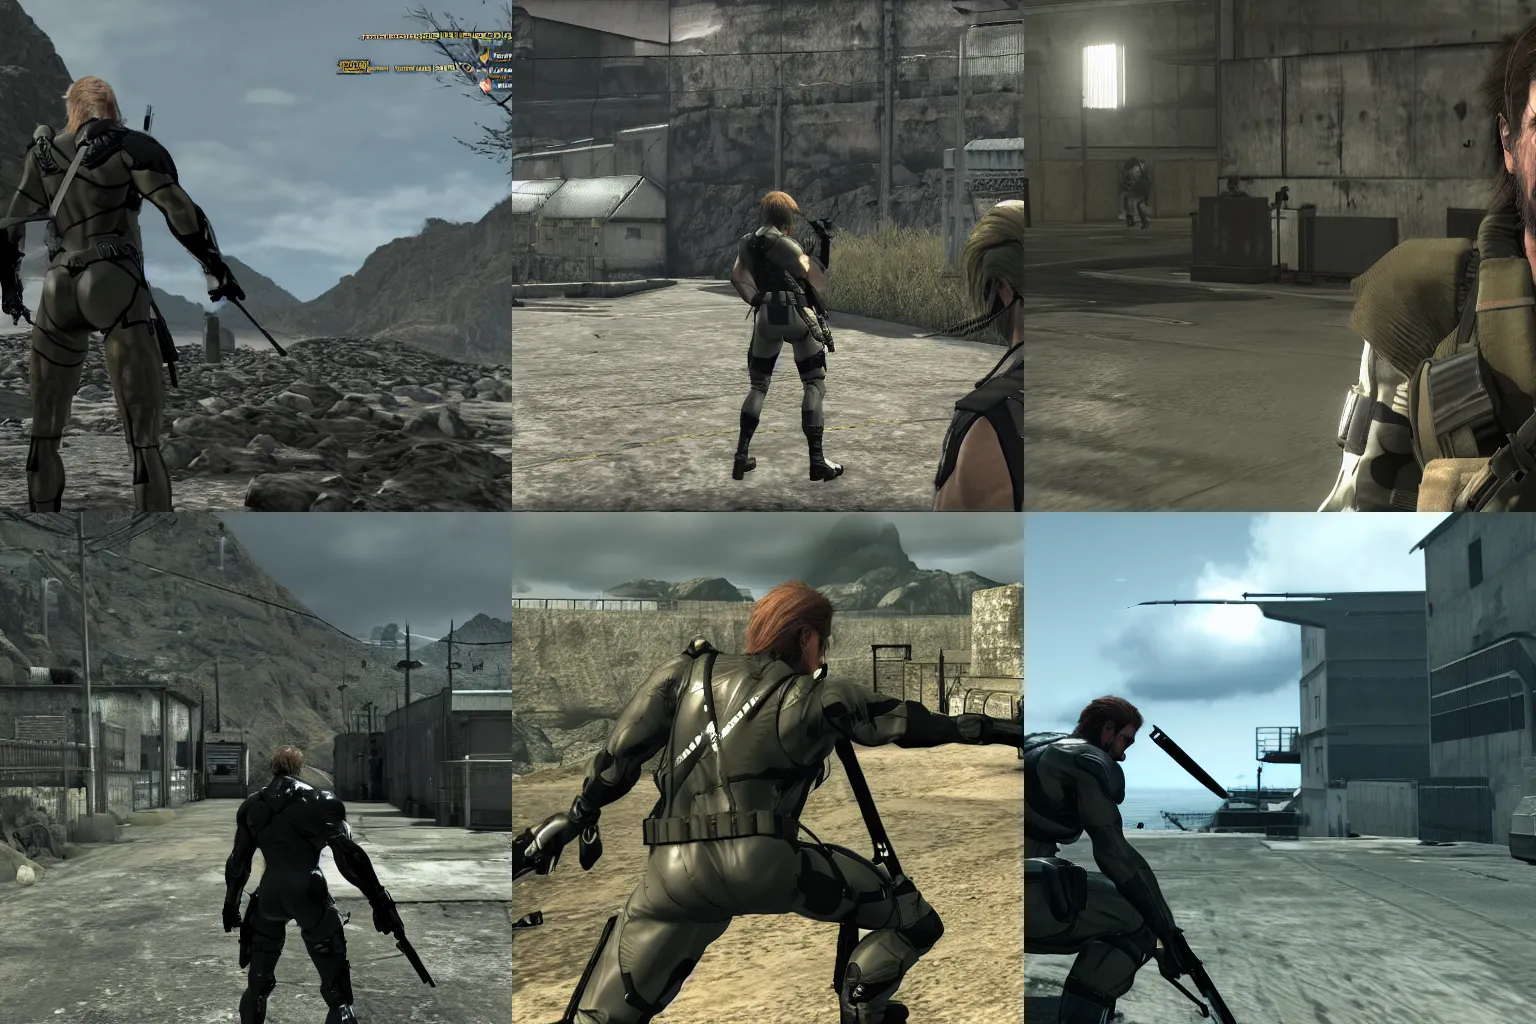 Prompt: Metal Gear Solid 6 ingame screenshot 4k max settings 60 fps